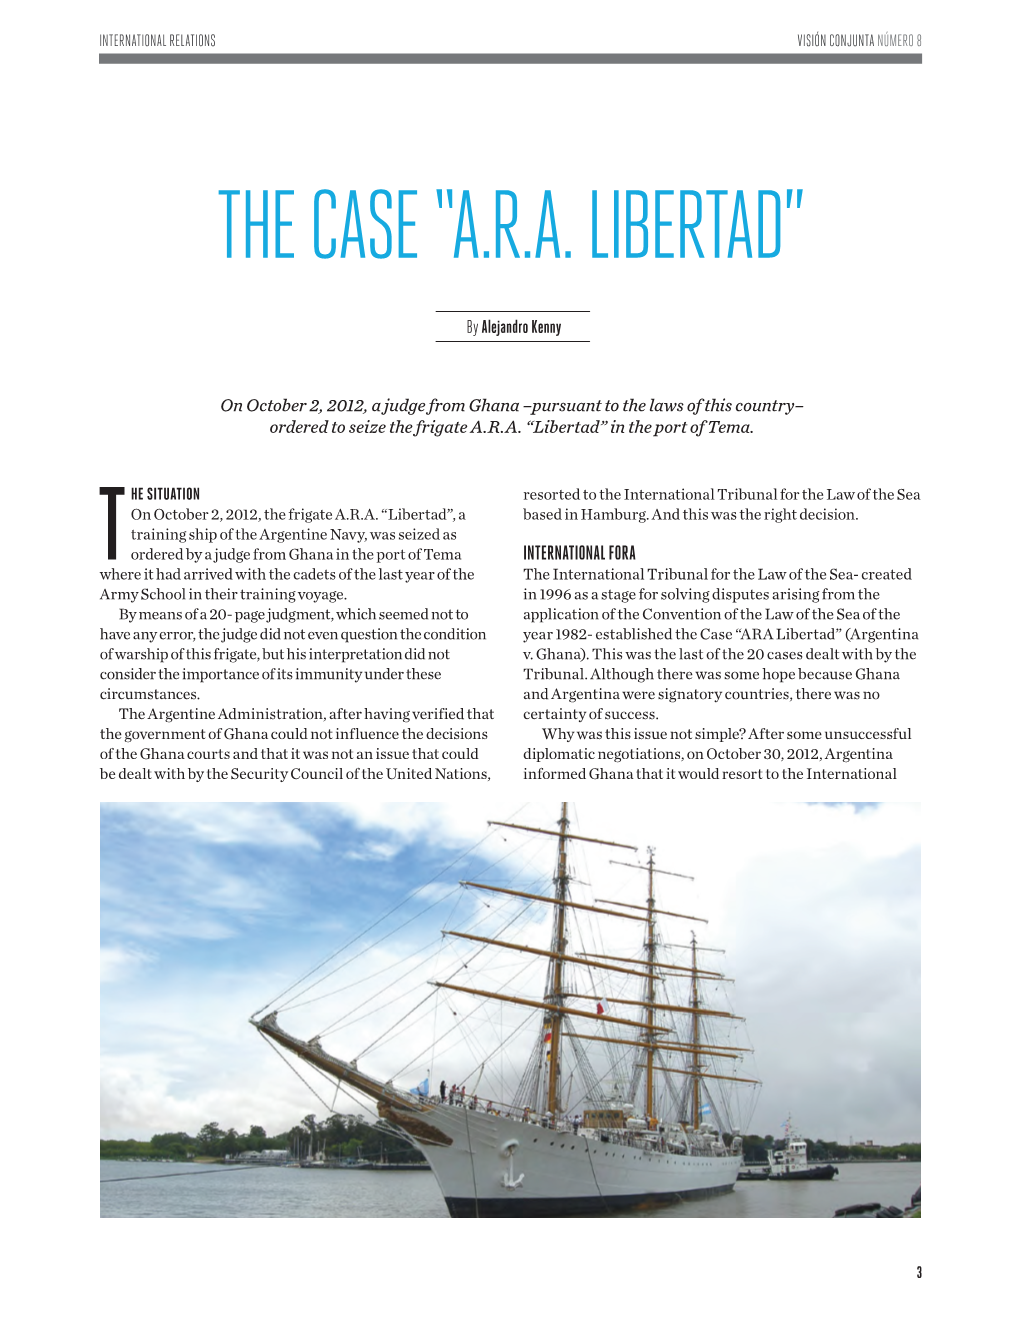 The Case “A.R.A. Libertad”